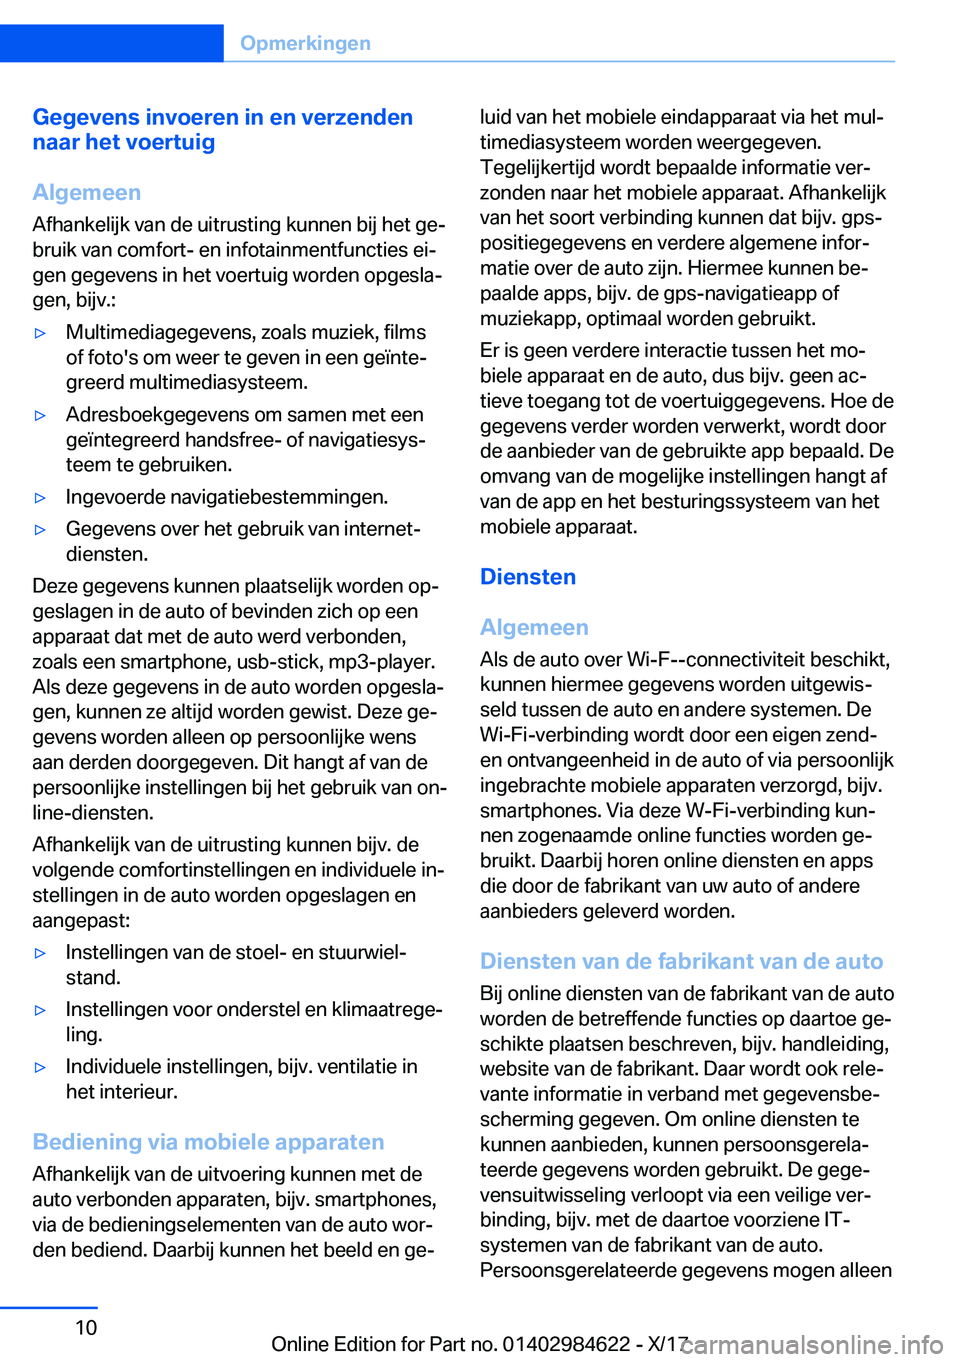 BMW 4 SERIES GRAN COUPE 2018  Instructieboekjes (in Dutch) �G�e�g�e�v�e�n�s��i�n�v�o�e�r�e�n��i�n��e�n��v�e�r�z�e�n�d�e�n
�n�a�a�r��h�e�t��v�o�e�r�t�u�i�g
�A�l�g�e�m�e�e�n
�A�f�h�a�n�k�e�l�i�j�k� �v�a�n� �d�e� �u�i�t�r�u�s�t�i�n�g� �k�u�n�n�e�n� �b�i�j�